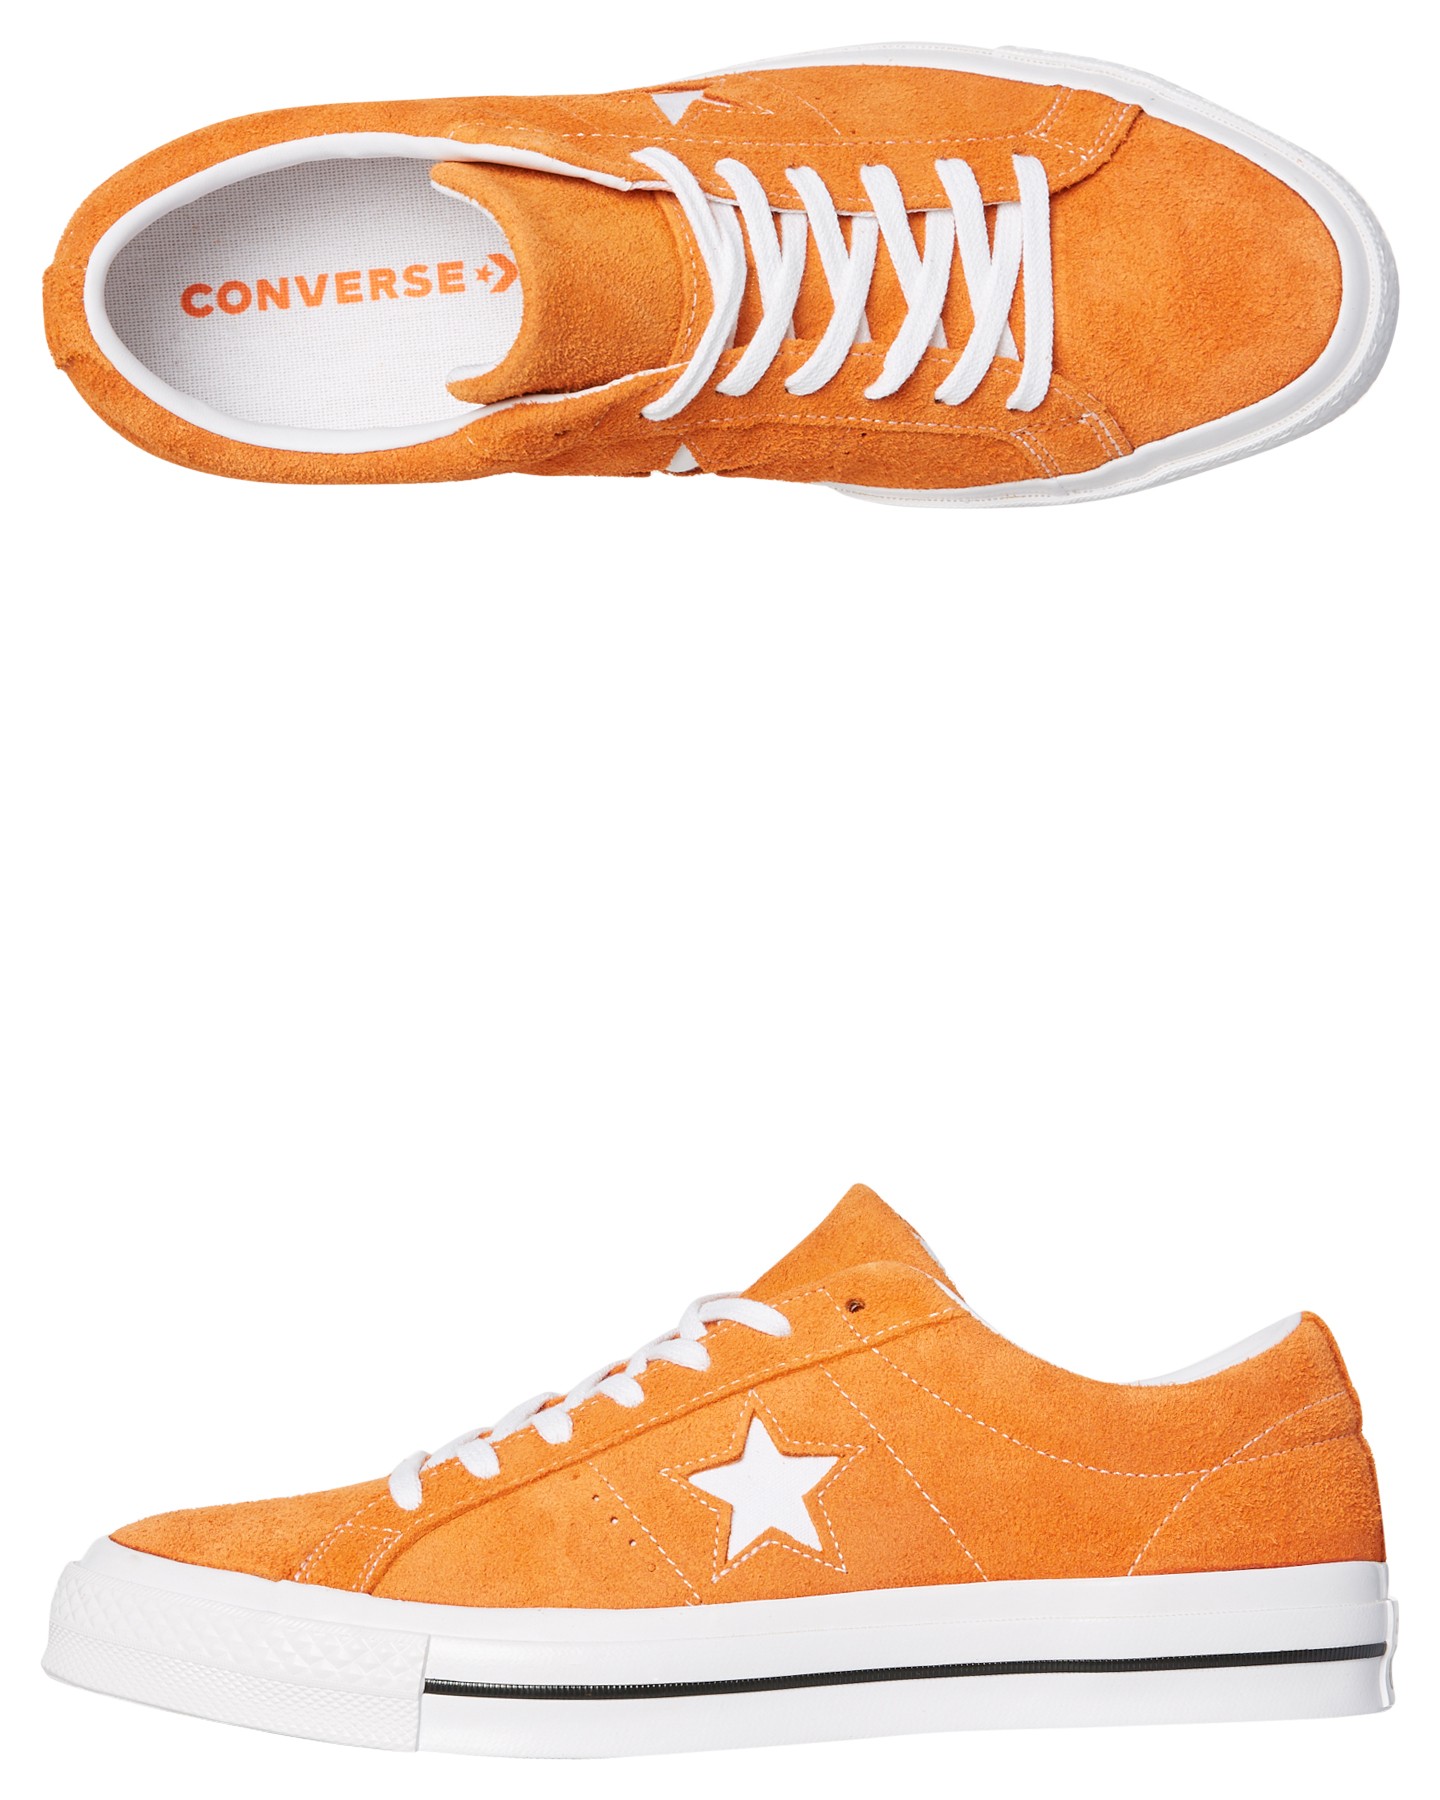 converse one star bold mandarin